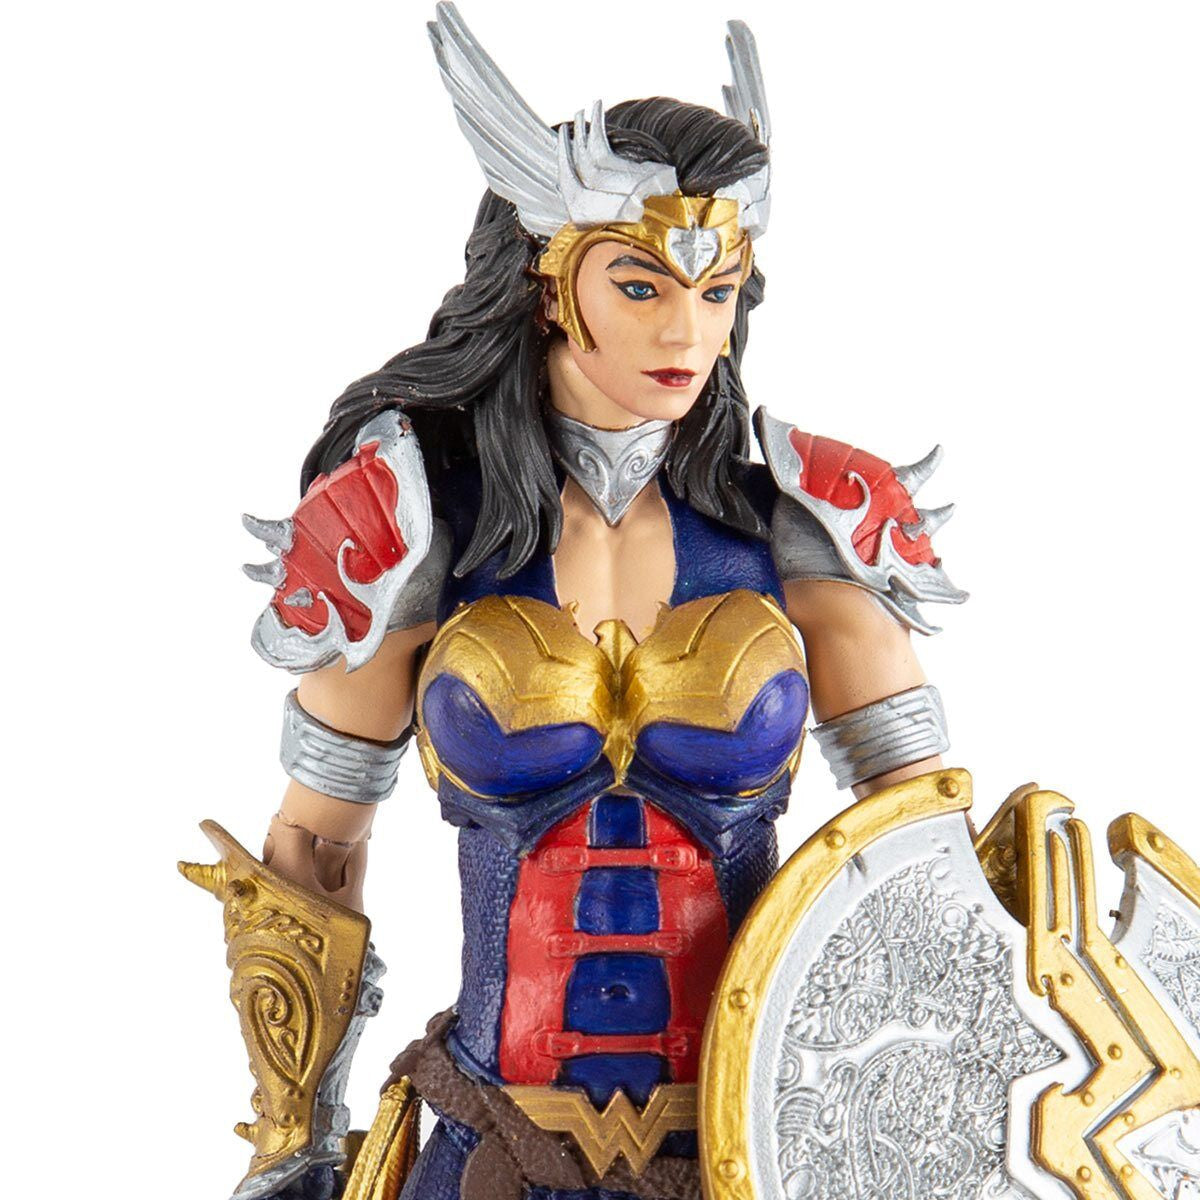 Figura Wonder Woman Multiverse DC Comics 18cm